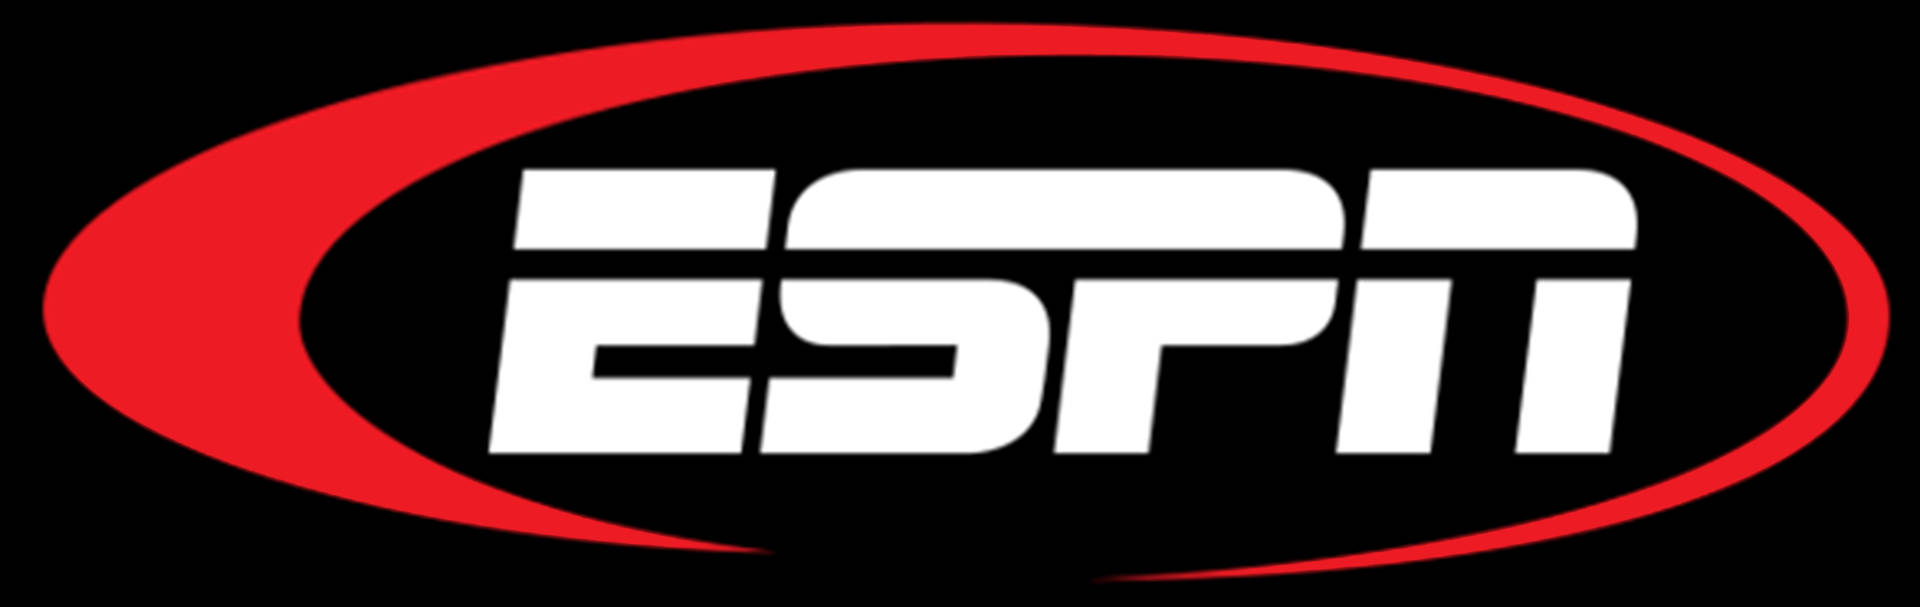 ESPN Oval-Shaped Logo Wallpaper